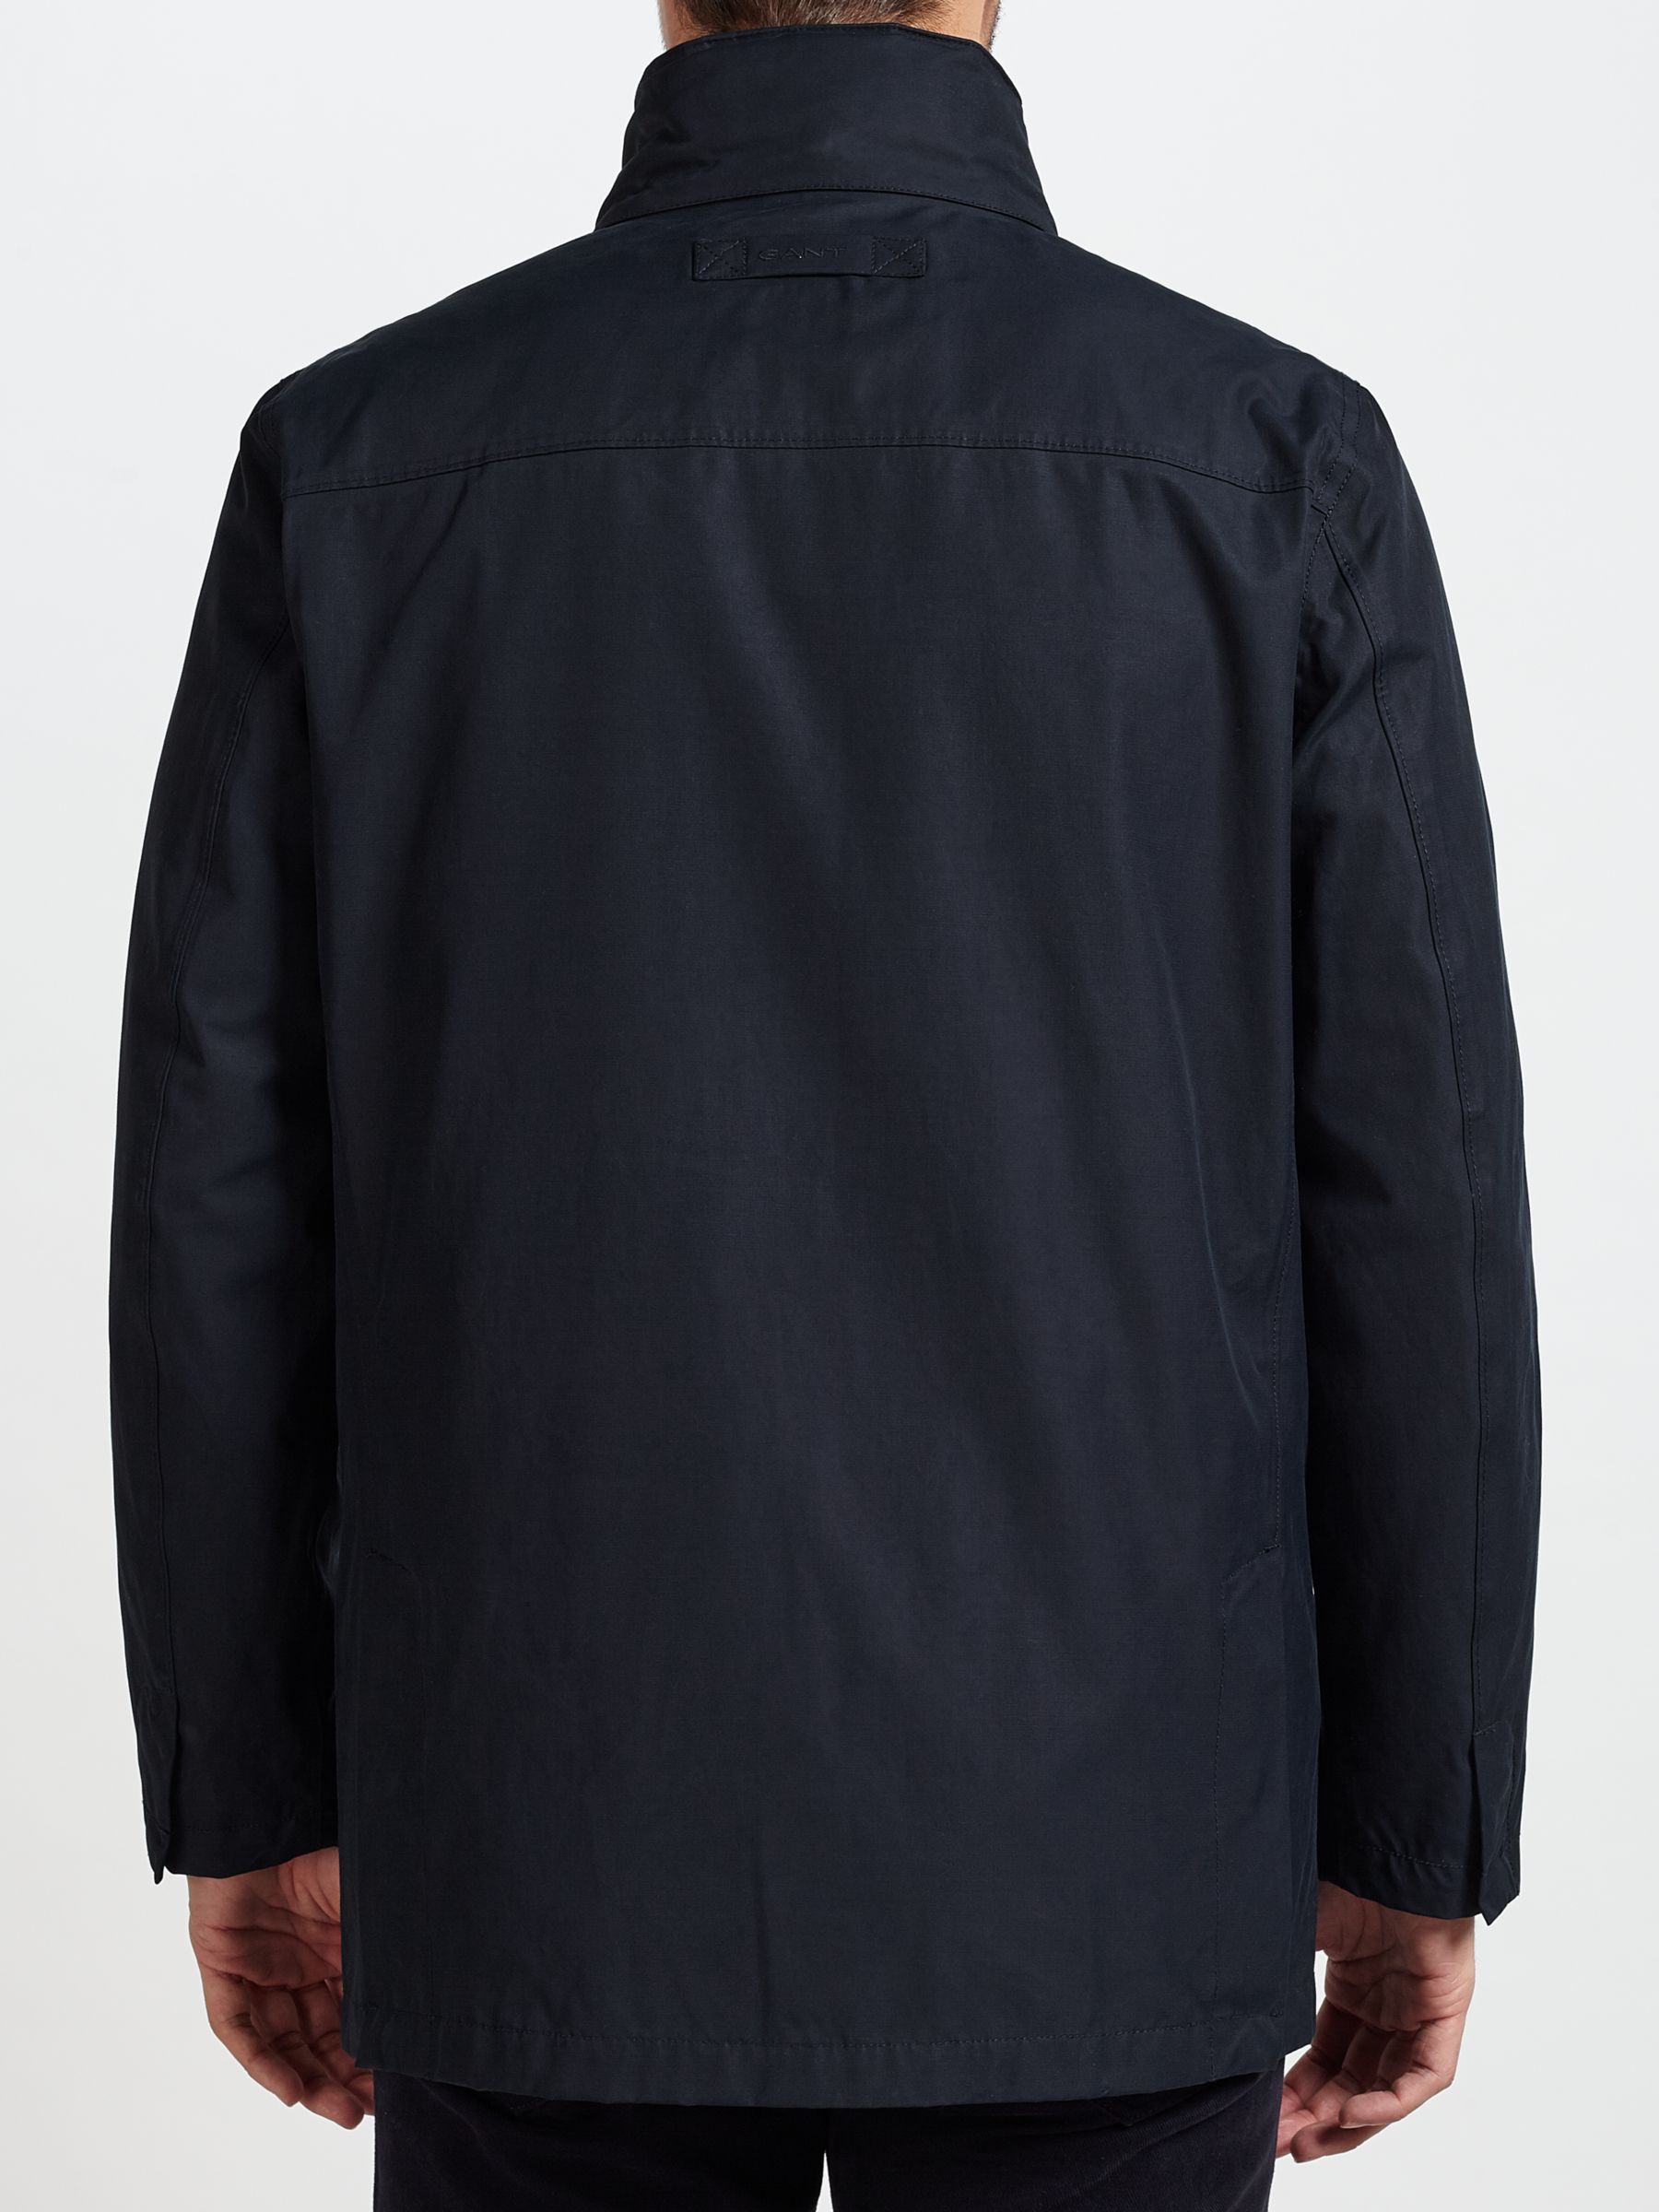 Gant Double Jacket, Navy at John Lewis & Partners